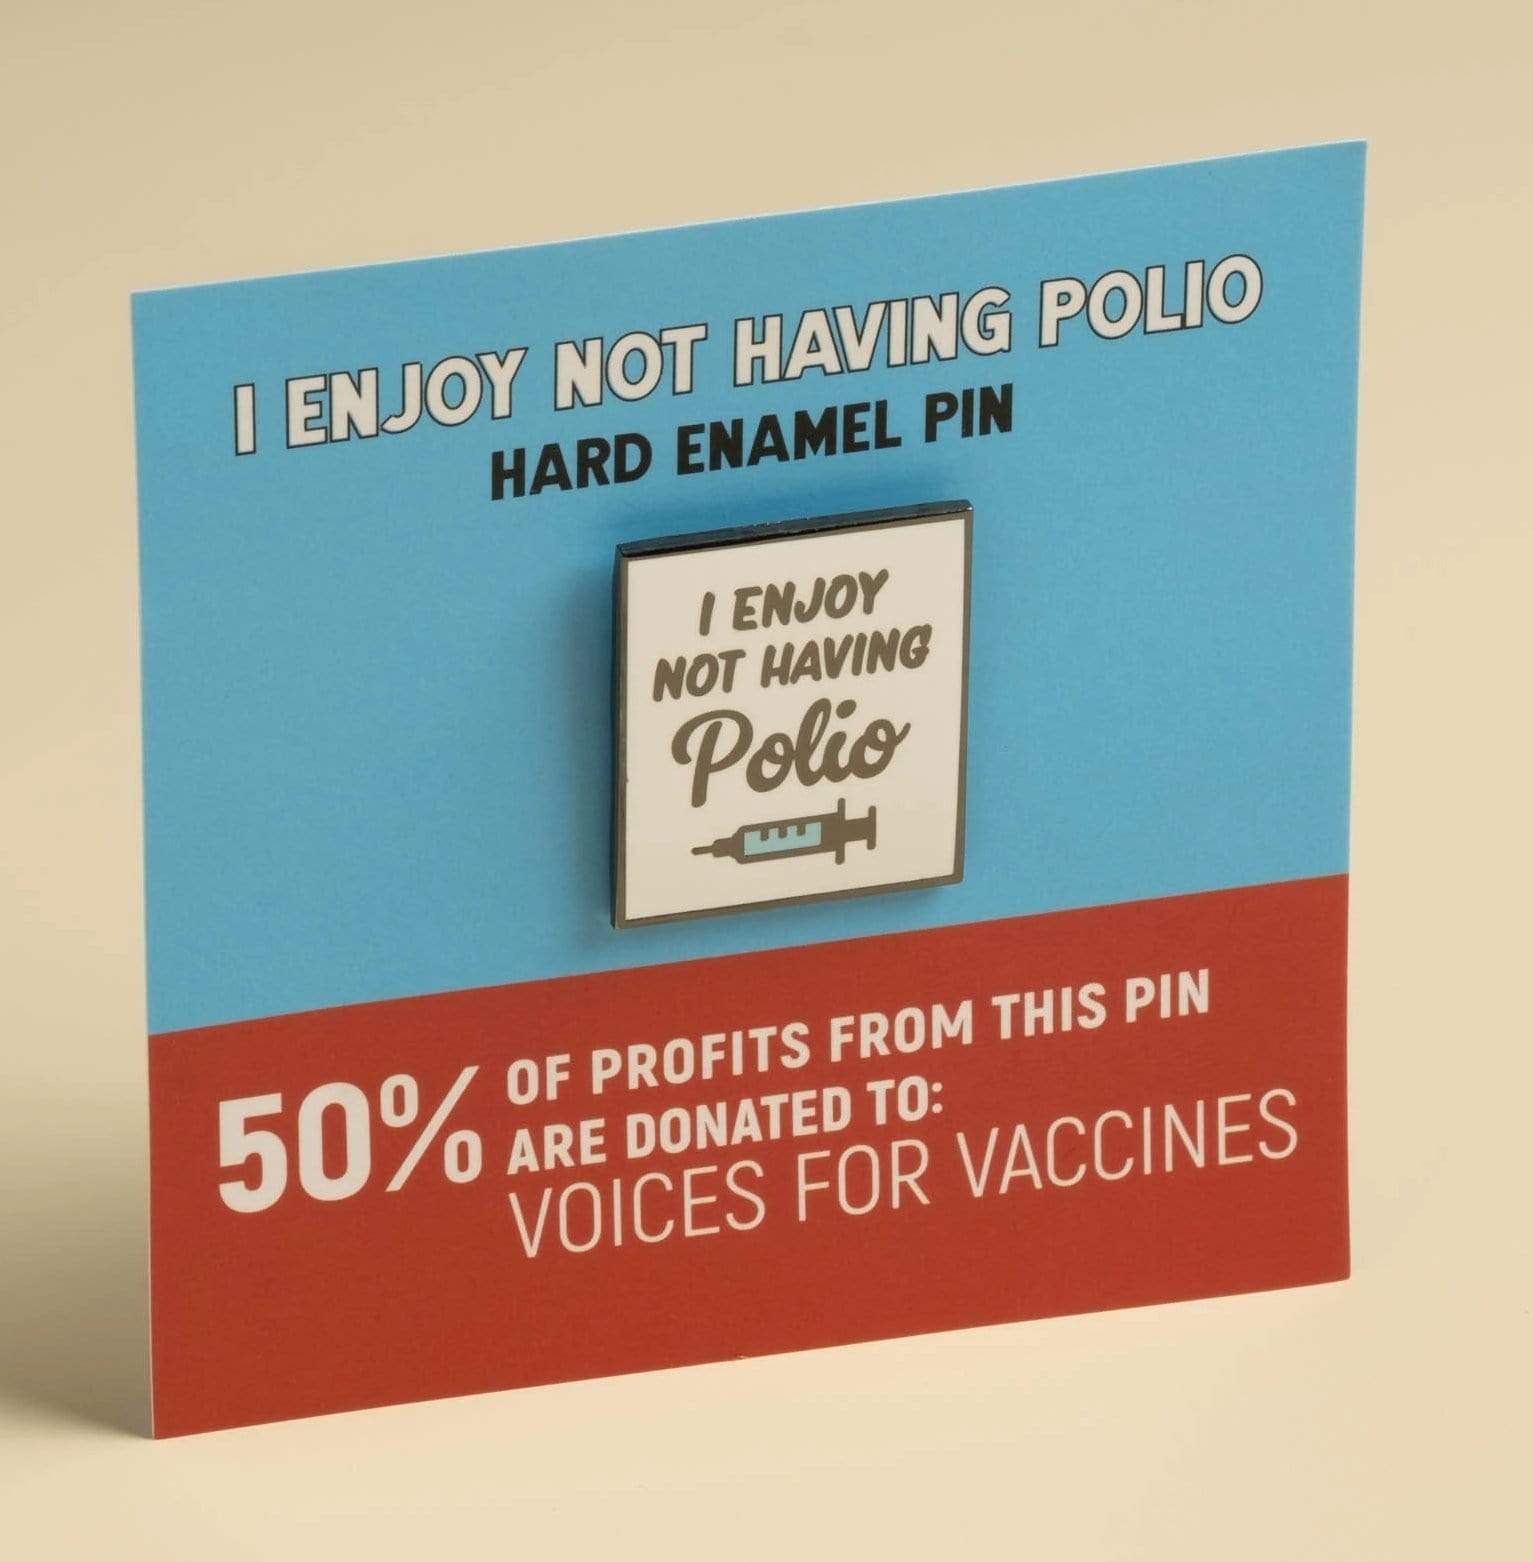 I enjoy not having polio Pin